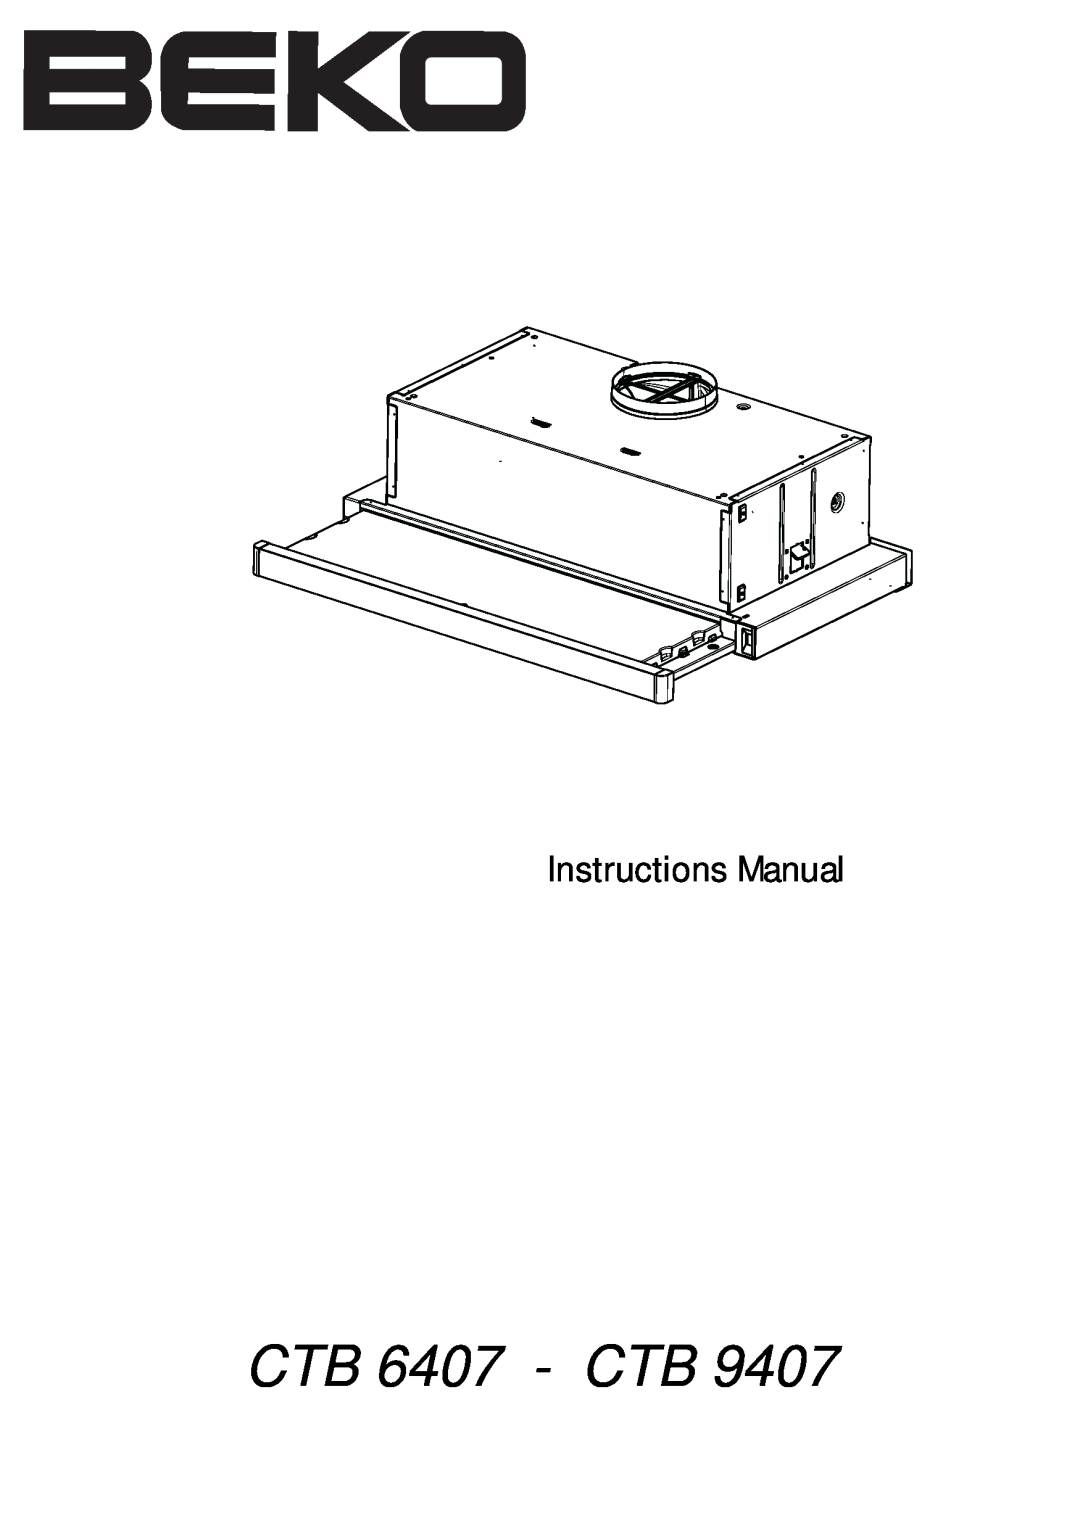 Beko CTb 9407 manual Instructions Manual, CTB 6407 - CTB 